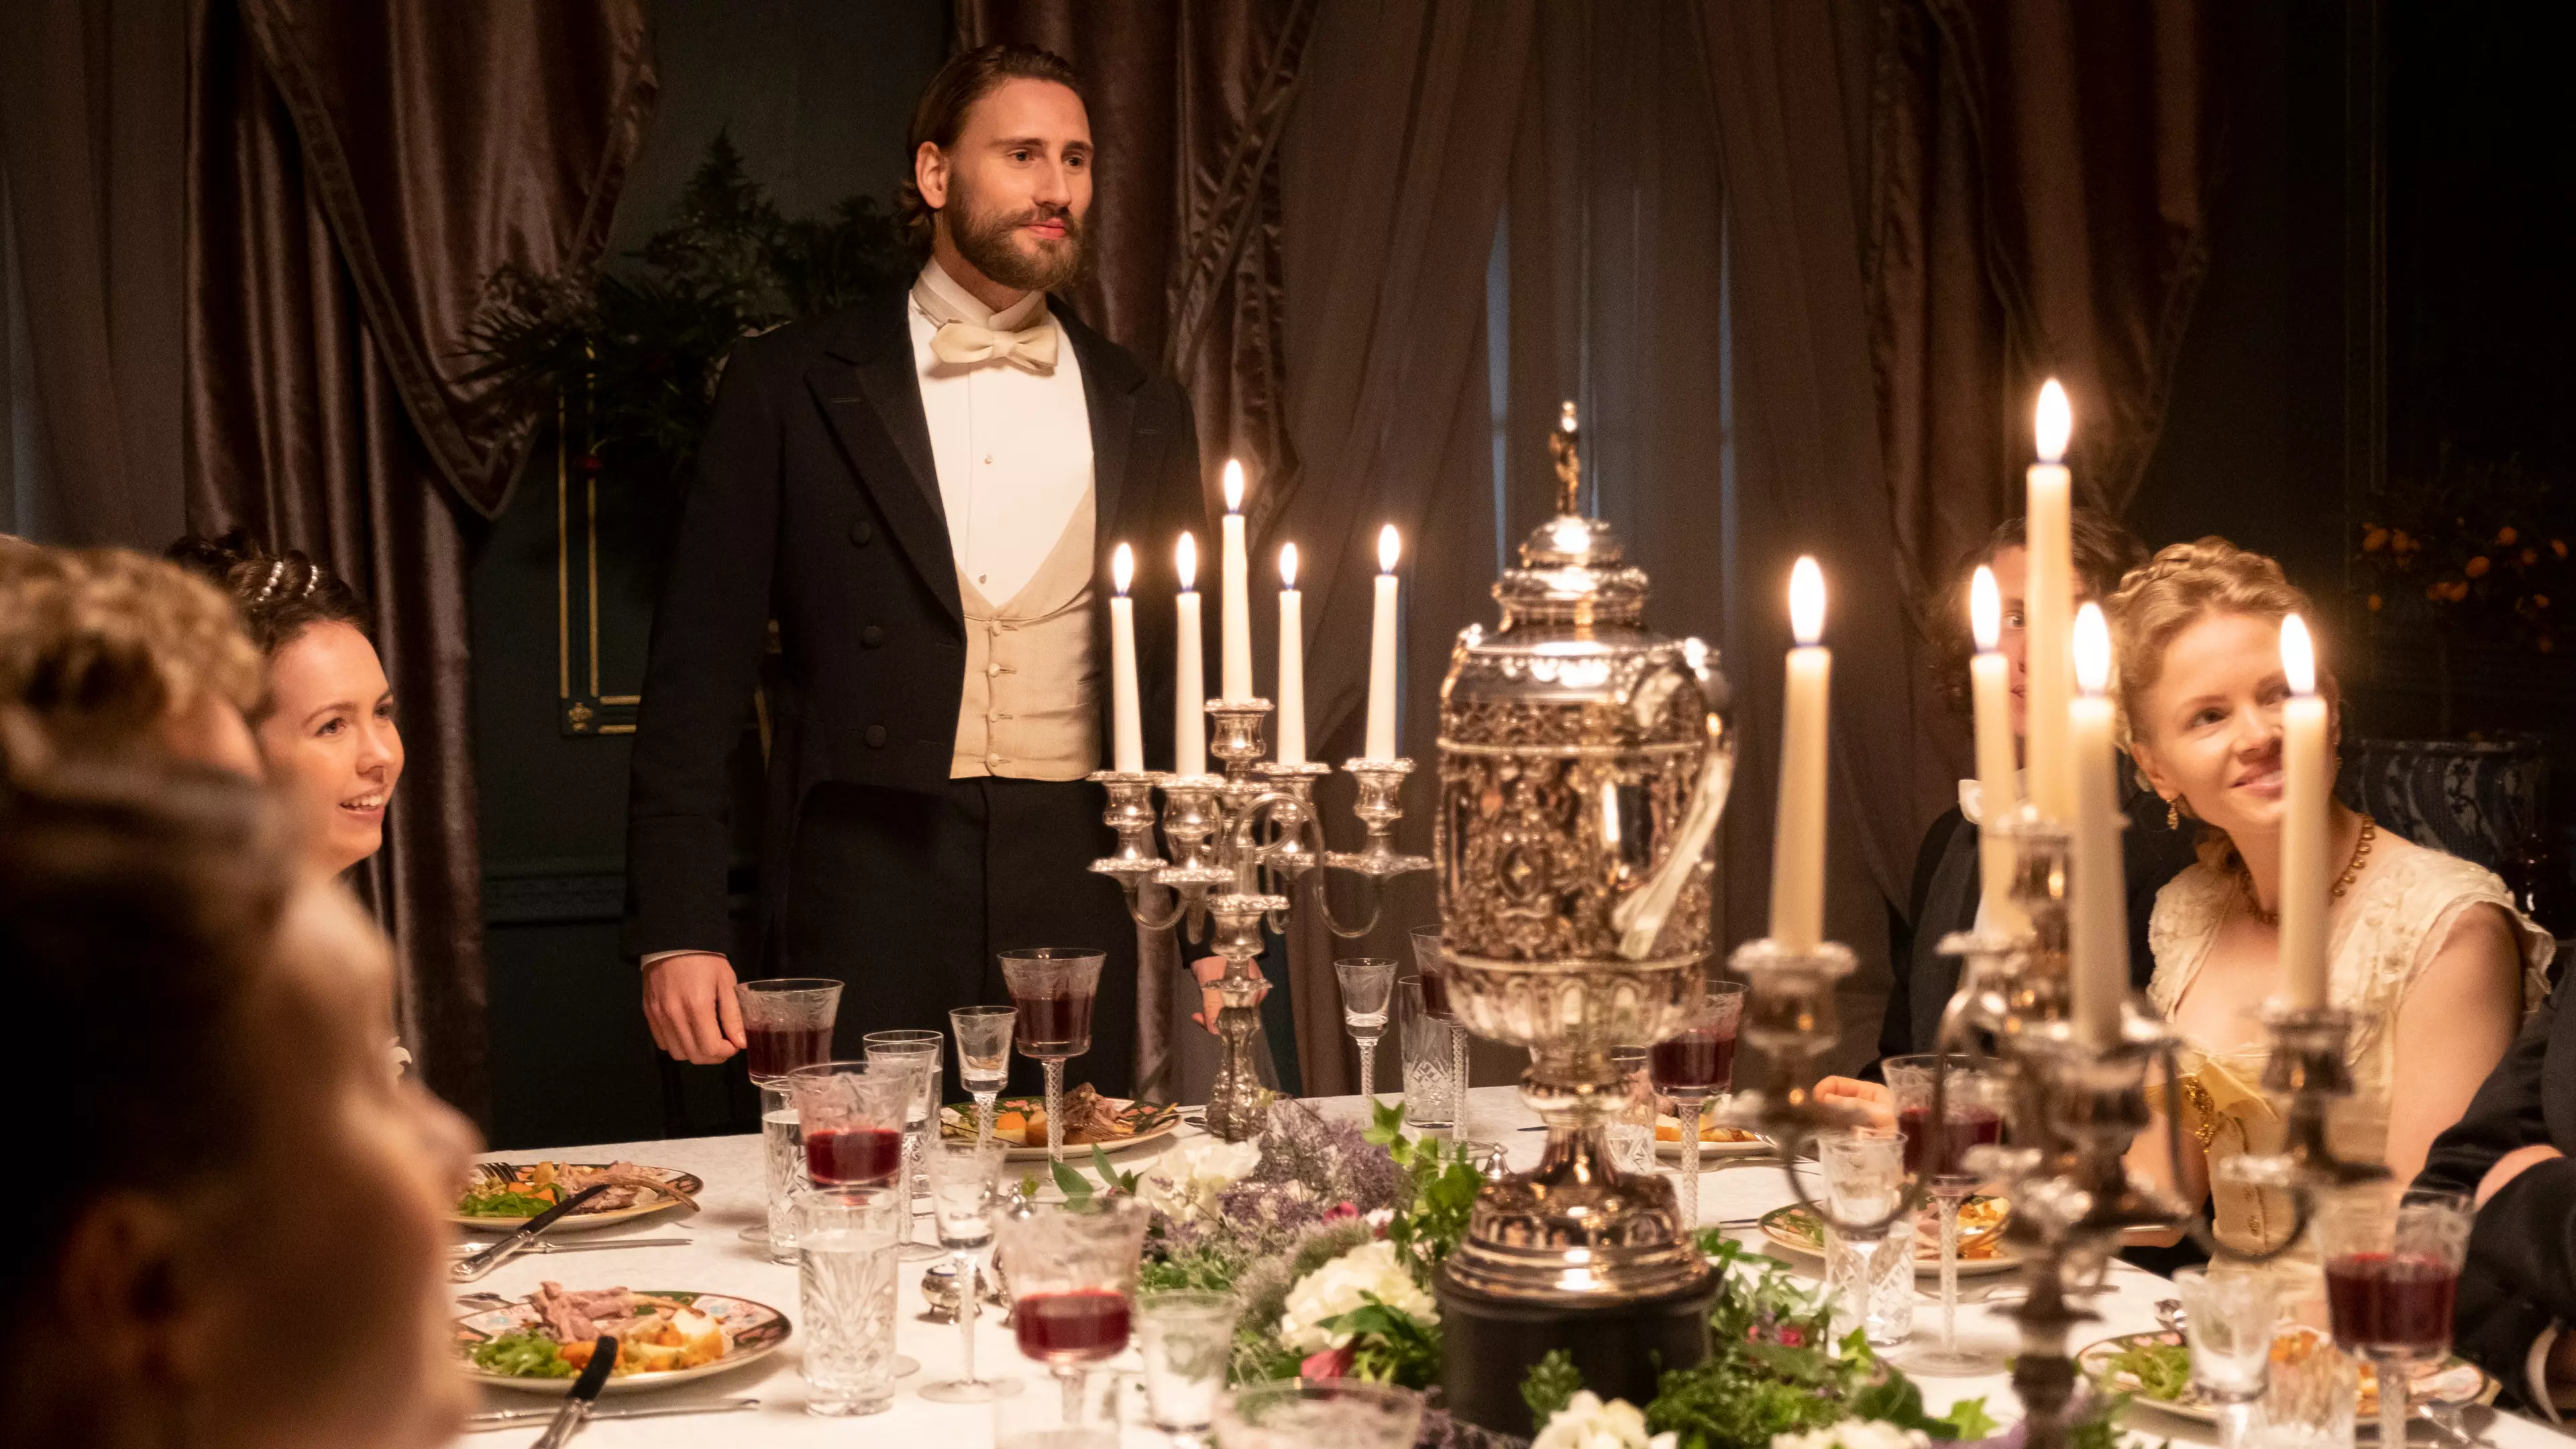 'Downton Abbey' Fans Will Love Netflix's New Period Drama Series